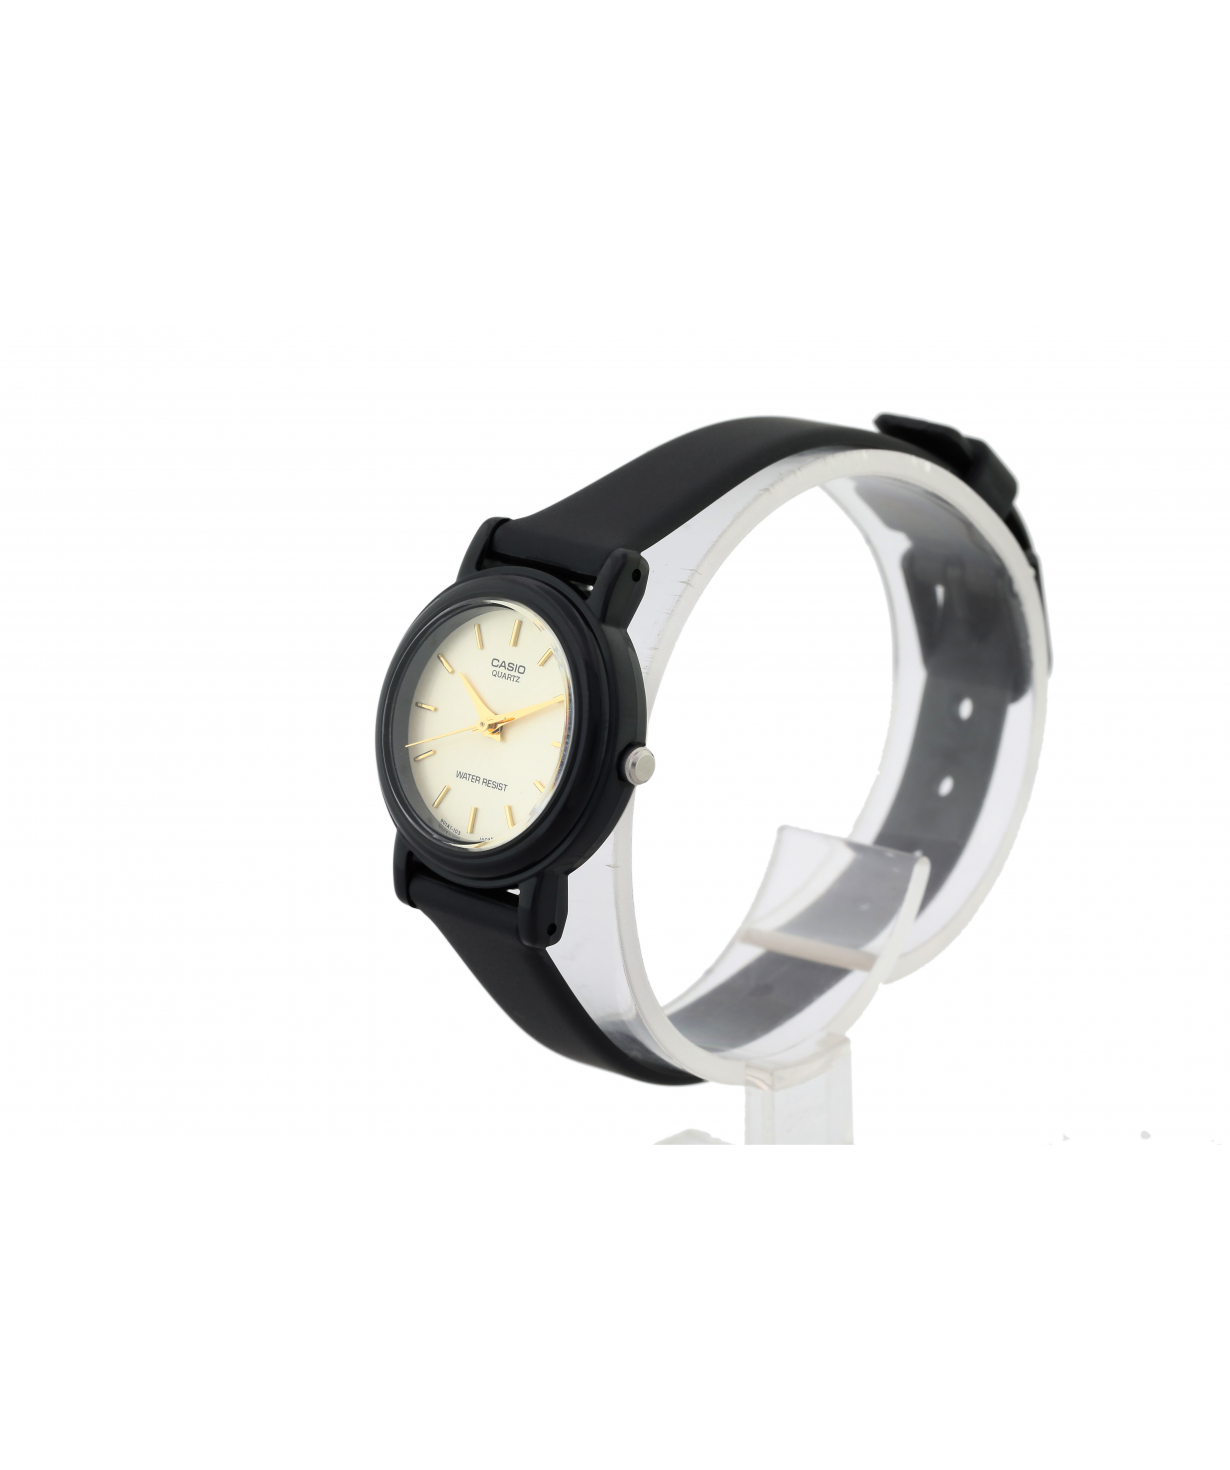 Ժամացույց  «Casio» ձեռքի  LQ-139EMV-9ALDF